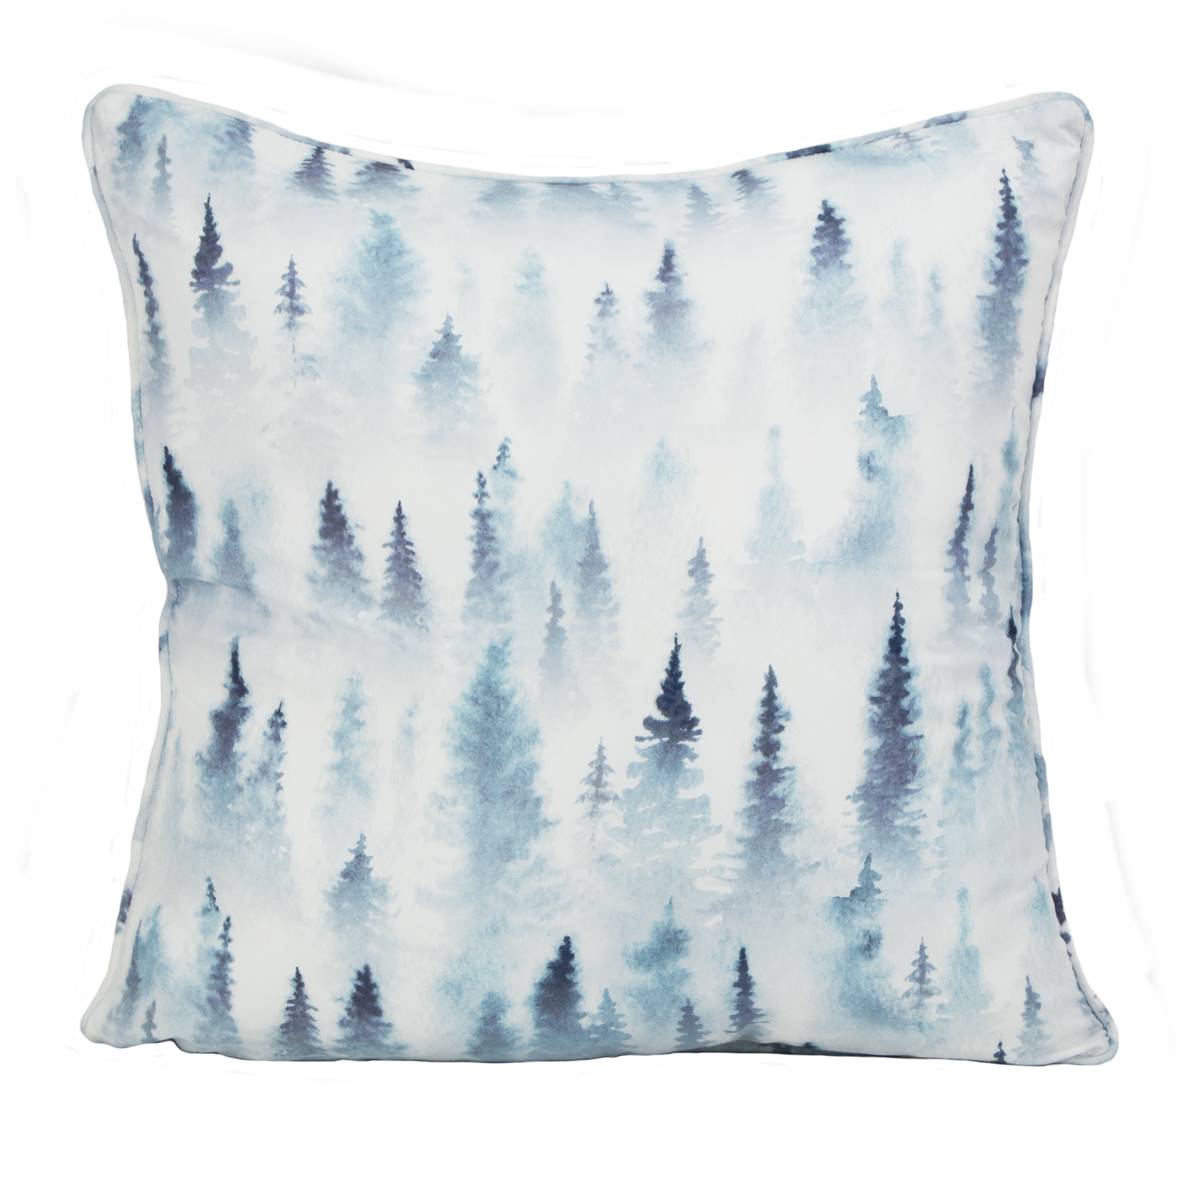 Donna Sharp Nightly Walk Tree Decorative Pillow - 18x18